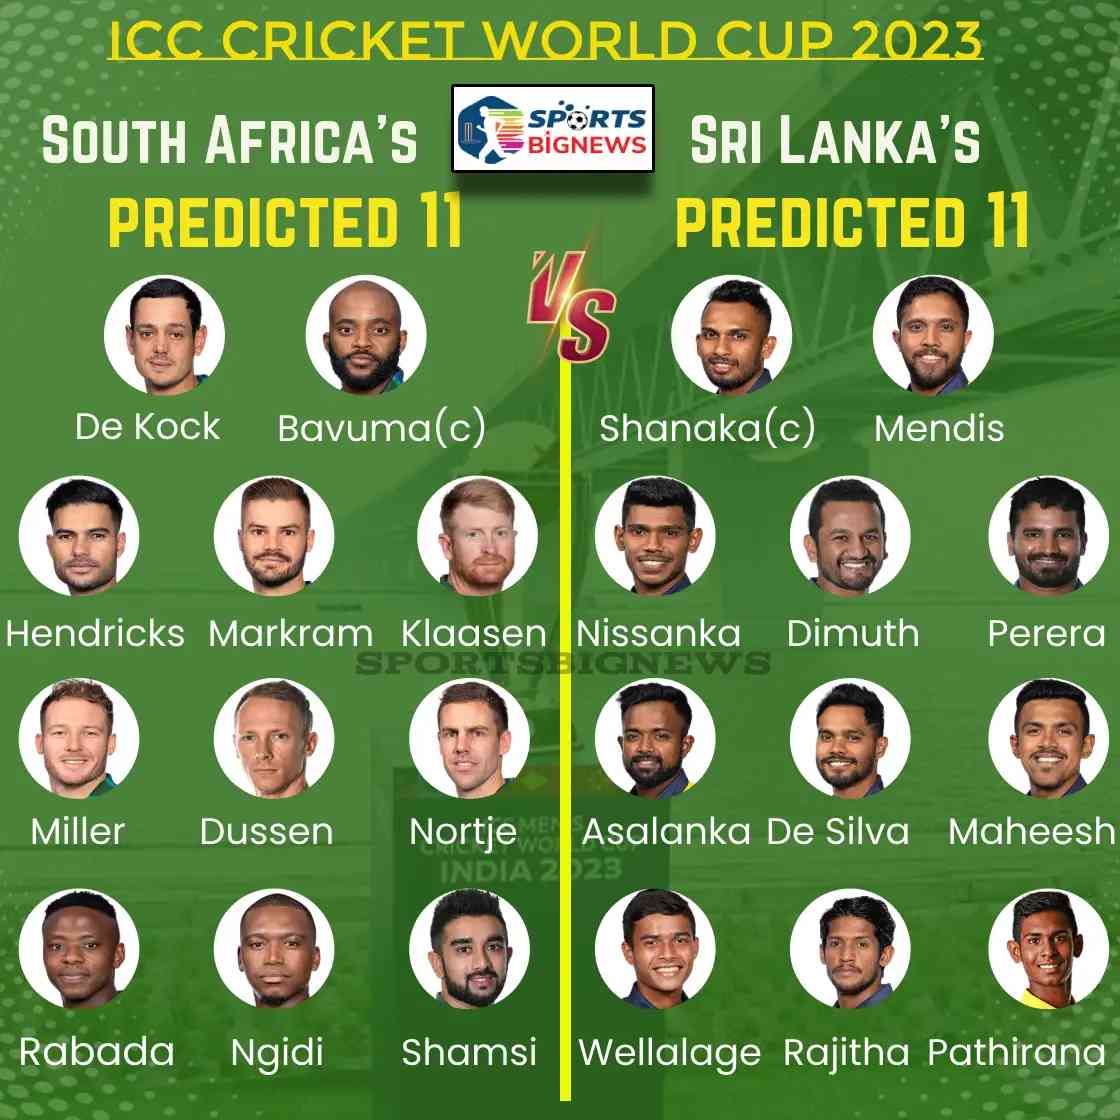 SA vs SL Prediction, Playing 11, Team Analysis Cricket World Cup 2023